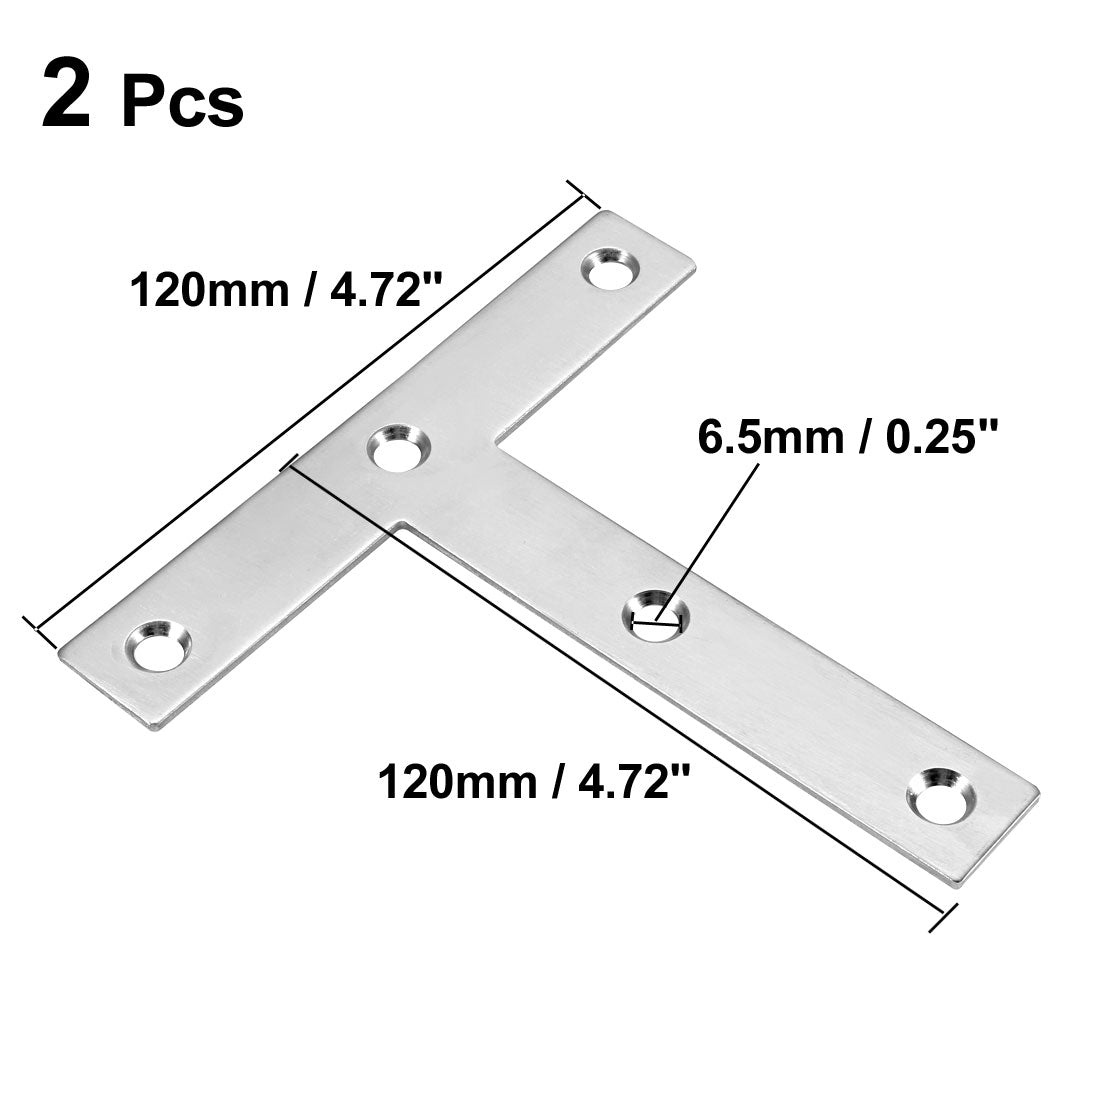 uxcell Uxcell Flat Plate T Shape,120mmx120mm,304 Stainless Steel Angle Corner Brace Repair Brackets 2pcs